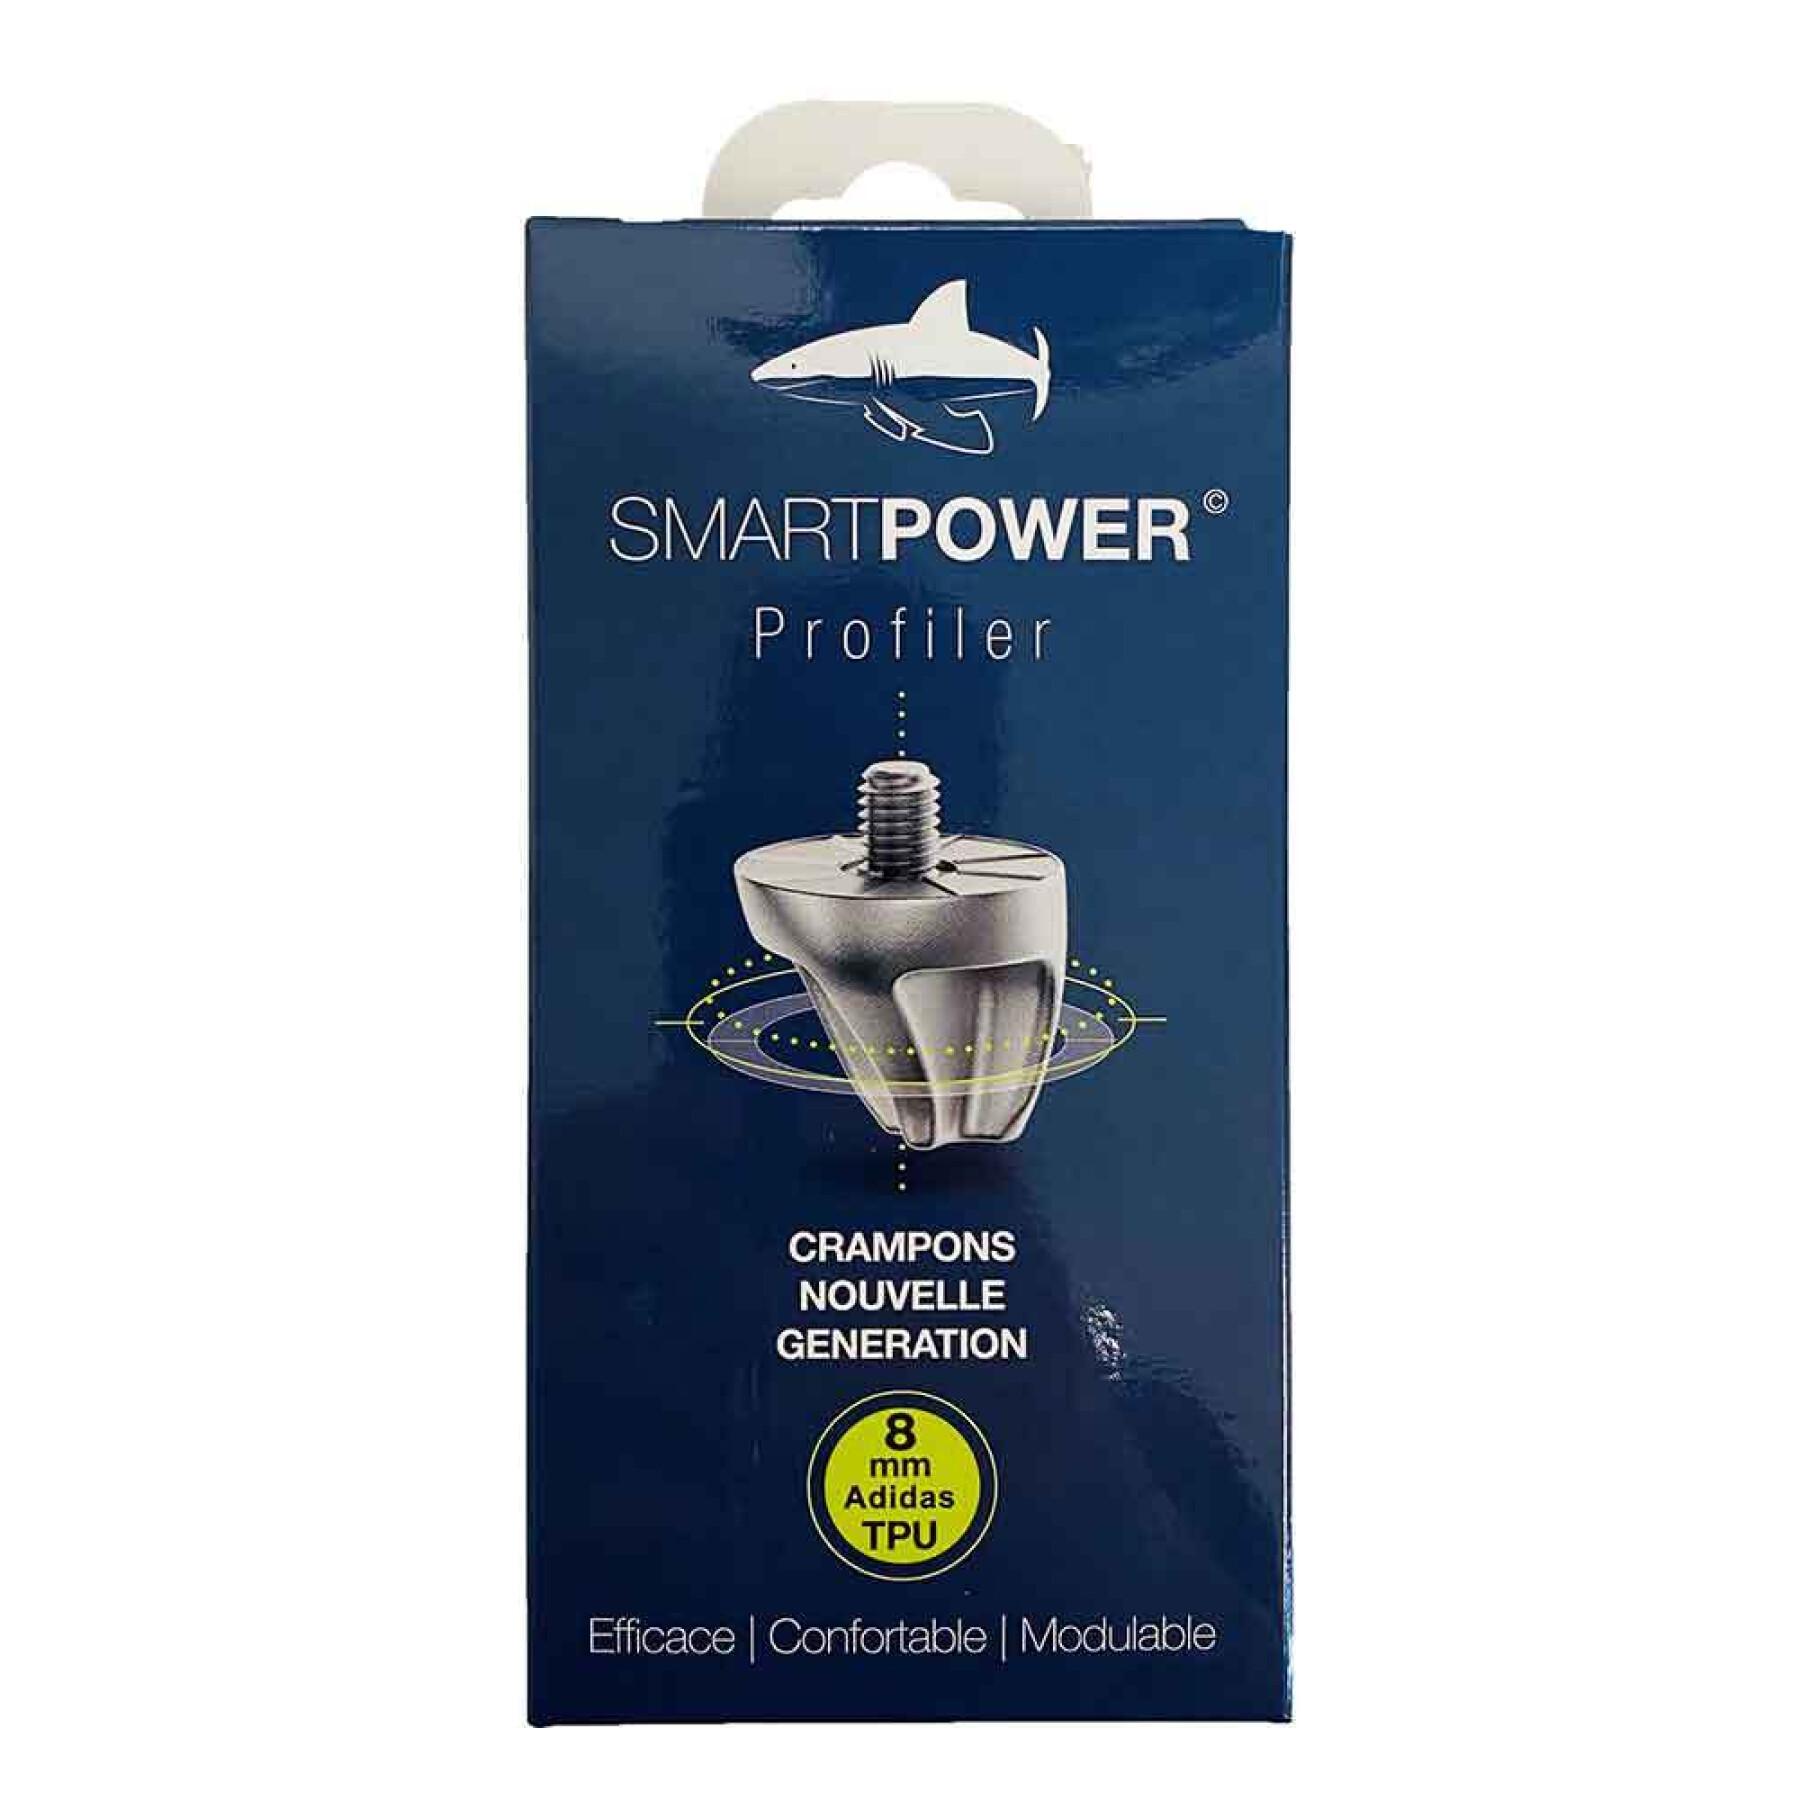 Crampons plastique Smart Power - 8mm adidas 